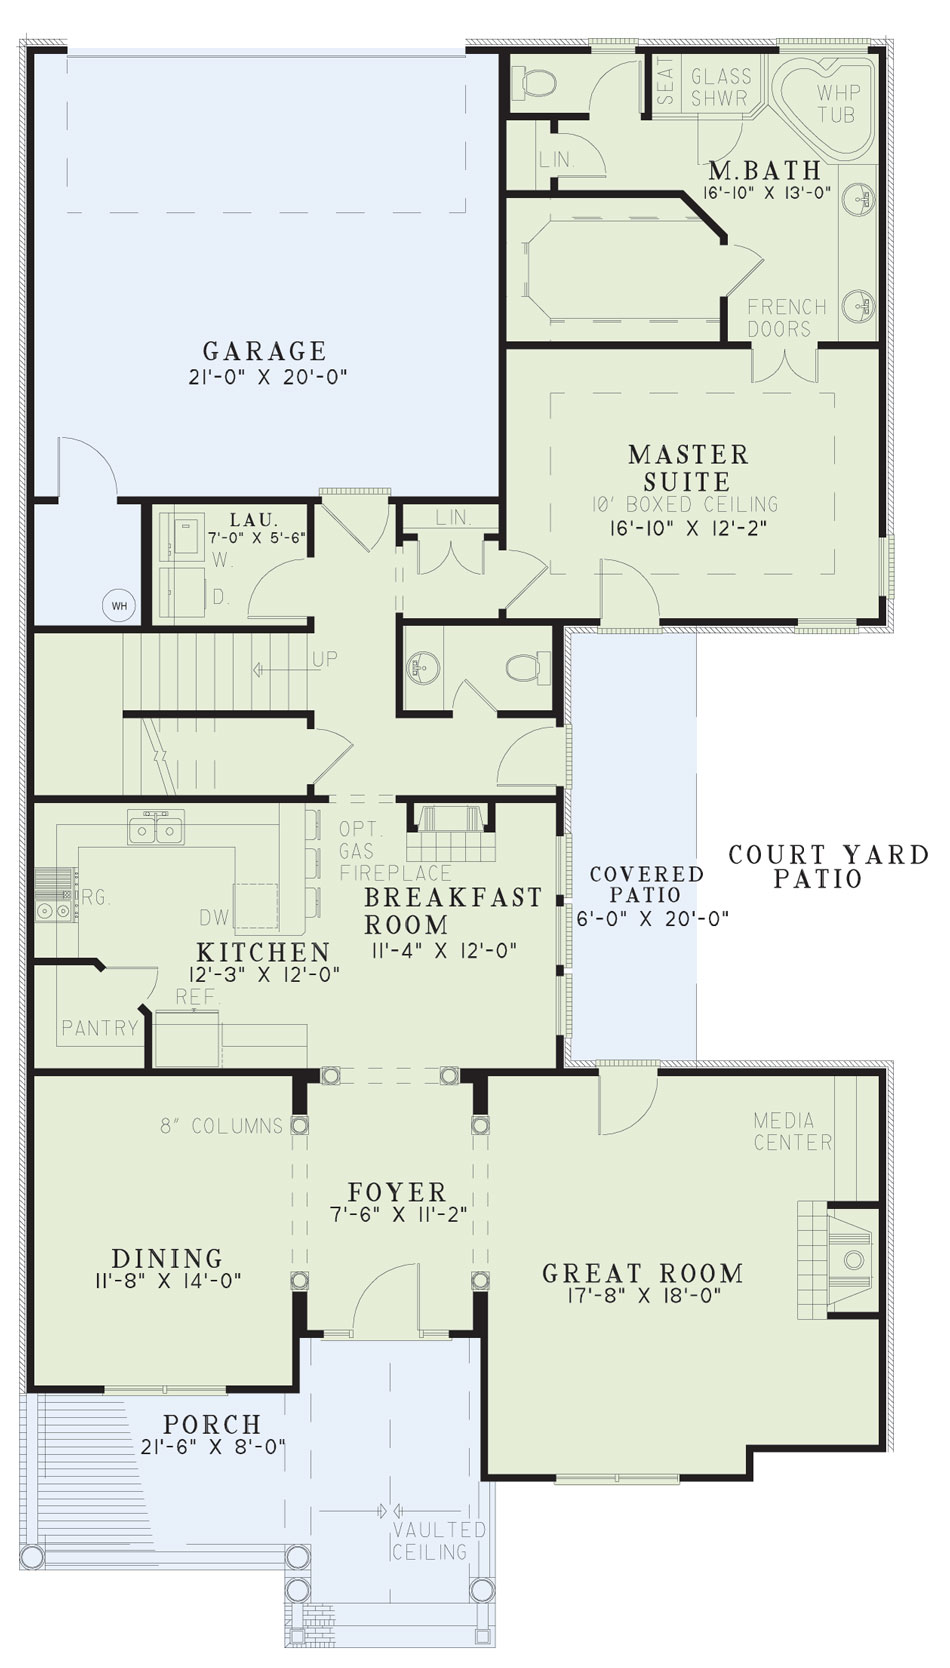 House Plan NDG 391 Main Floor